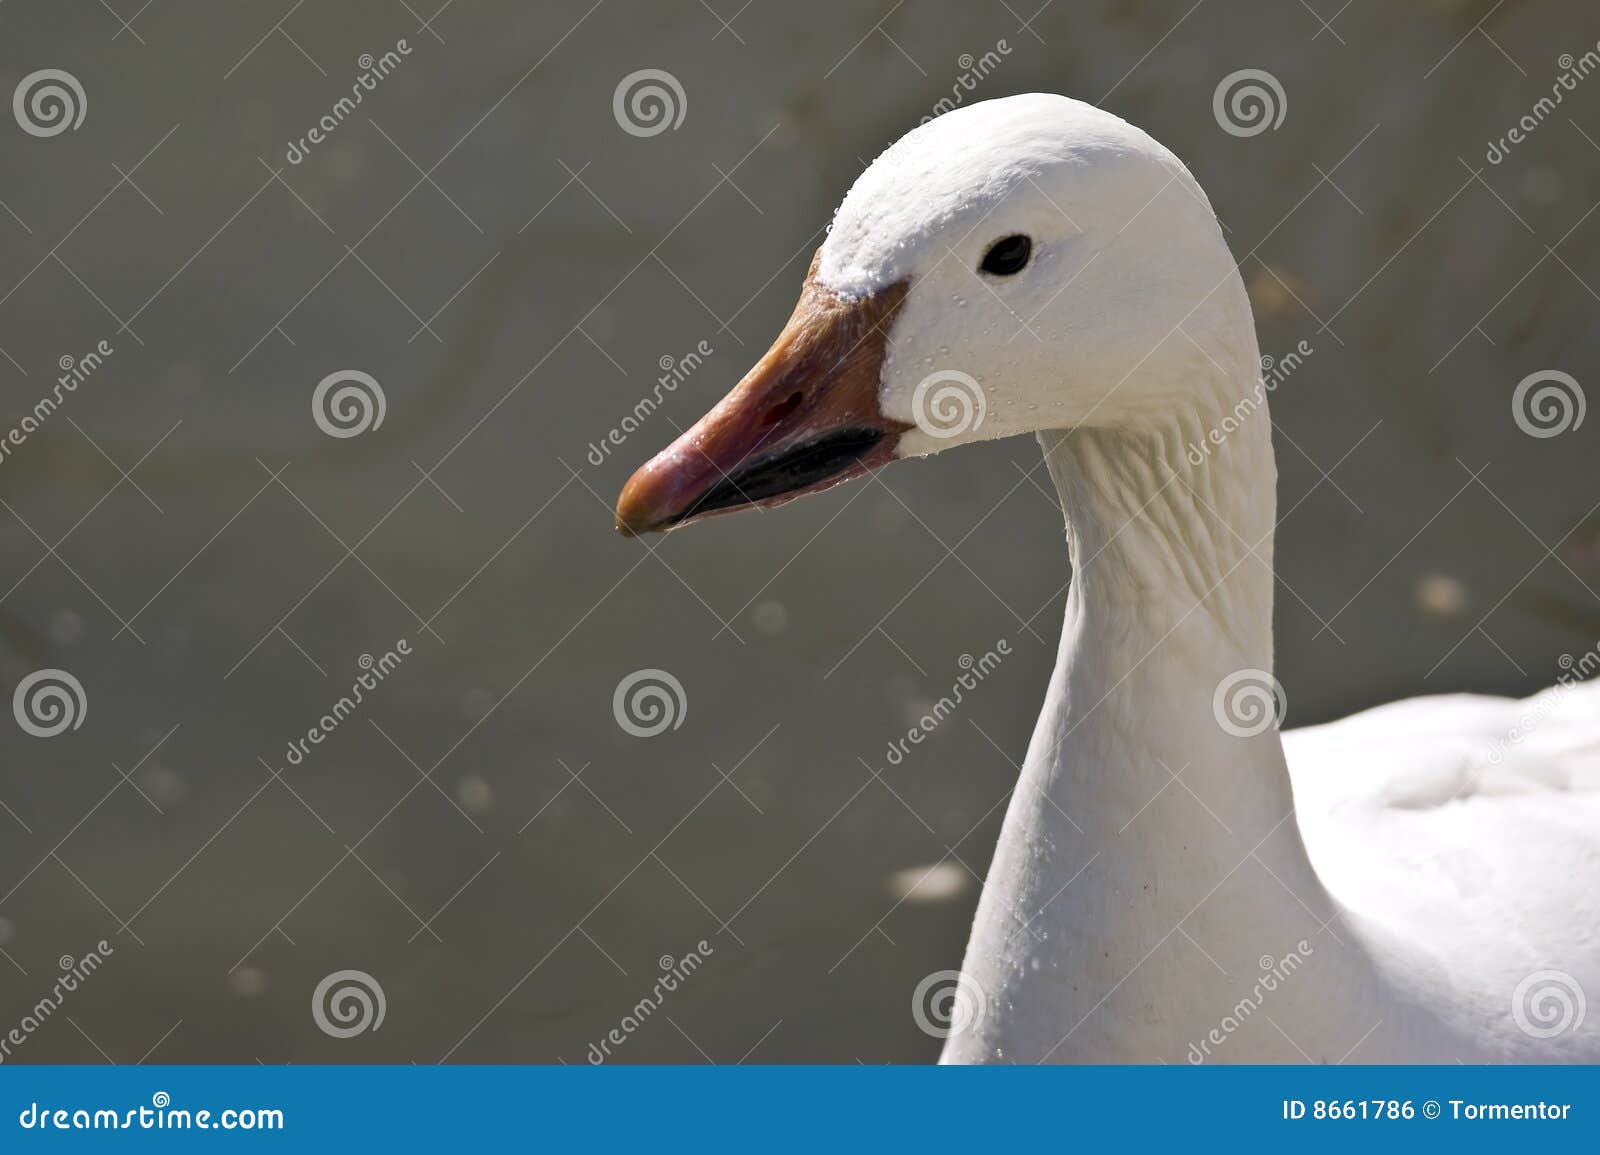 profile of a lesser snow goose (chen caerulescens)